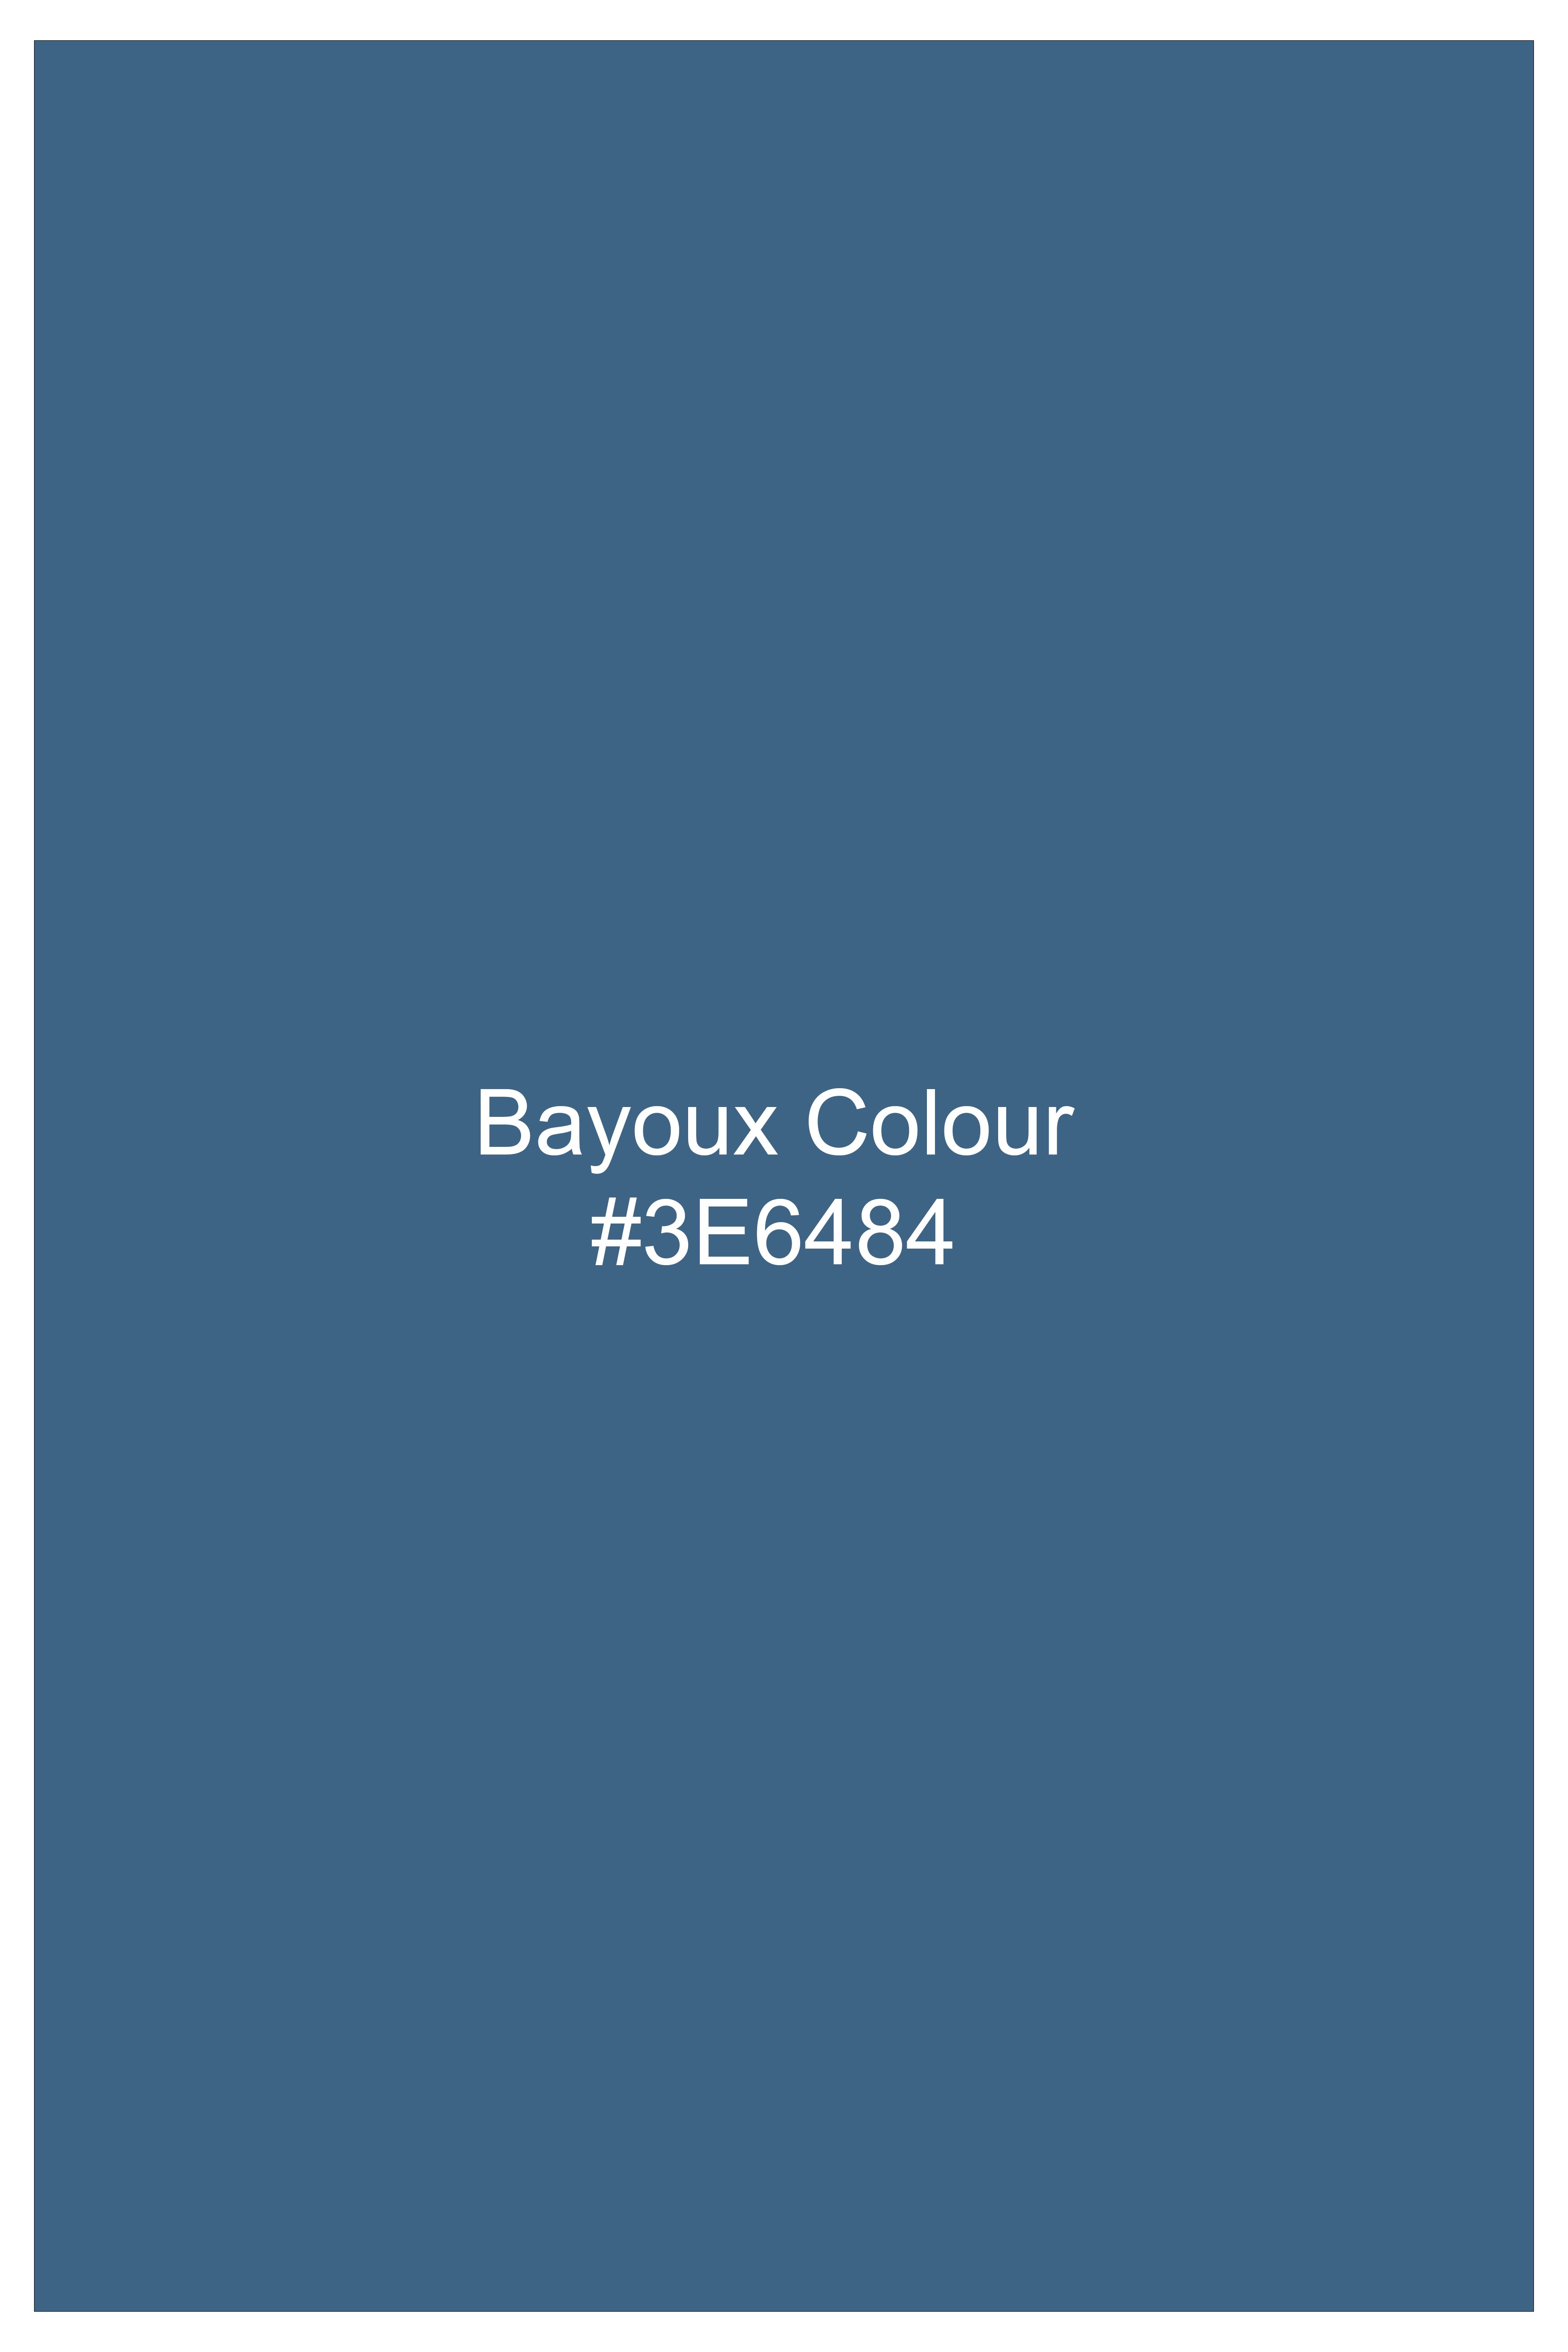 Bayoux Blue Super oft Premium Cotton Short